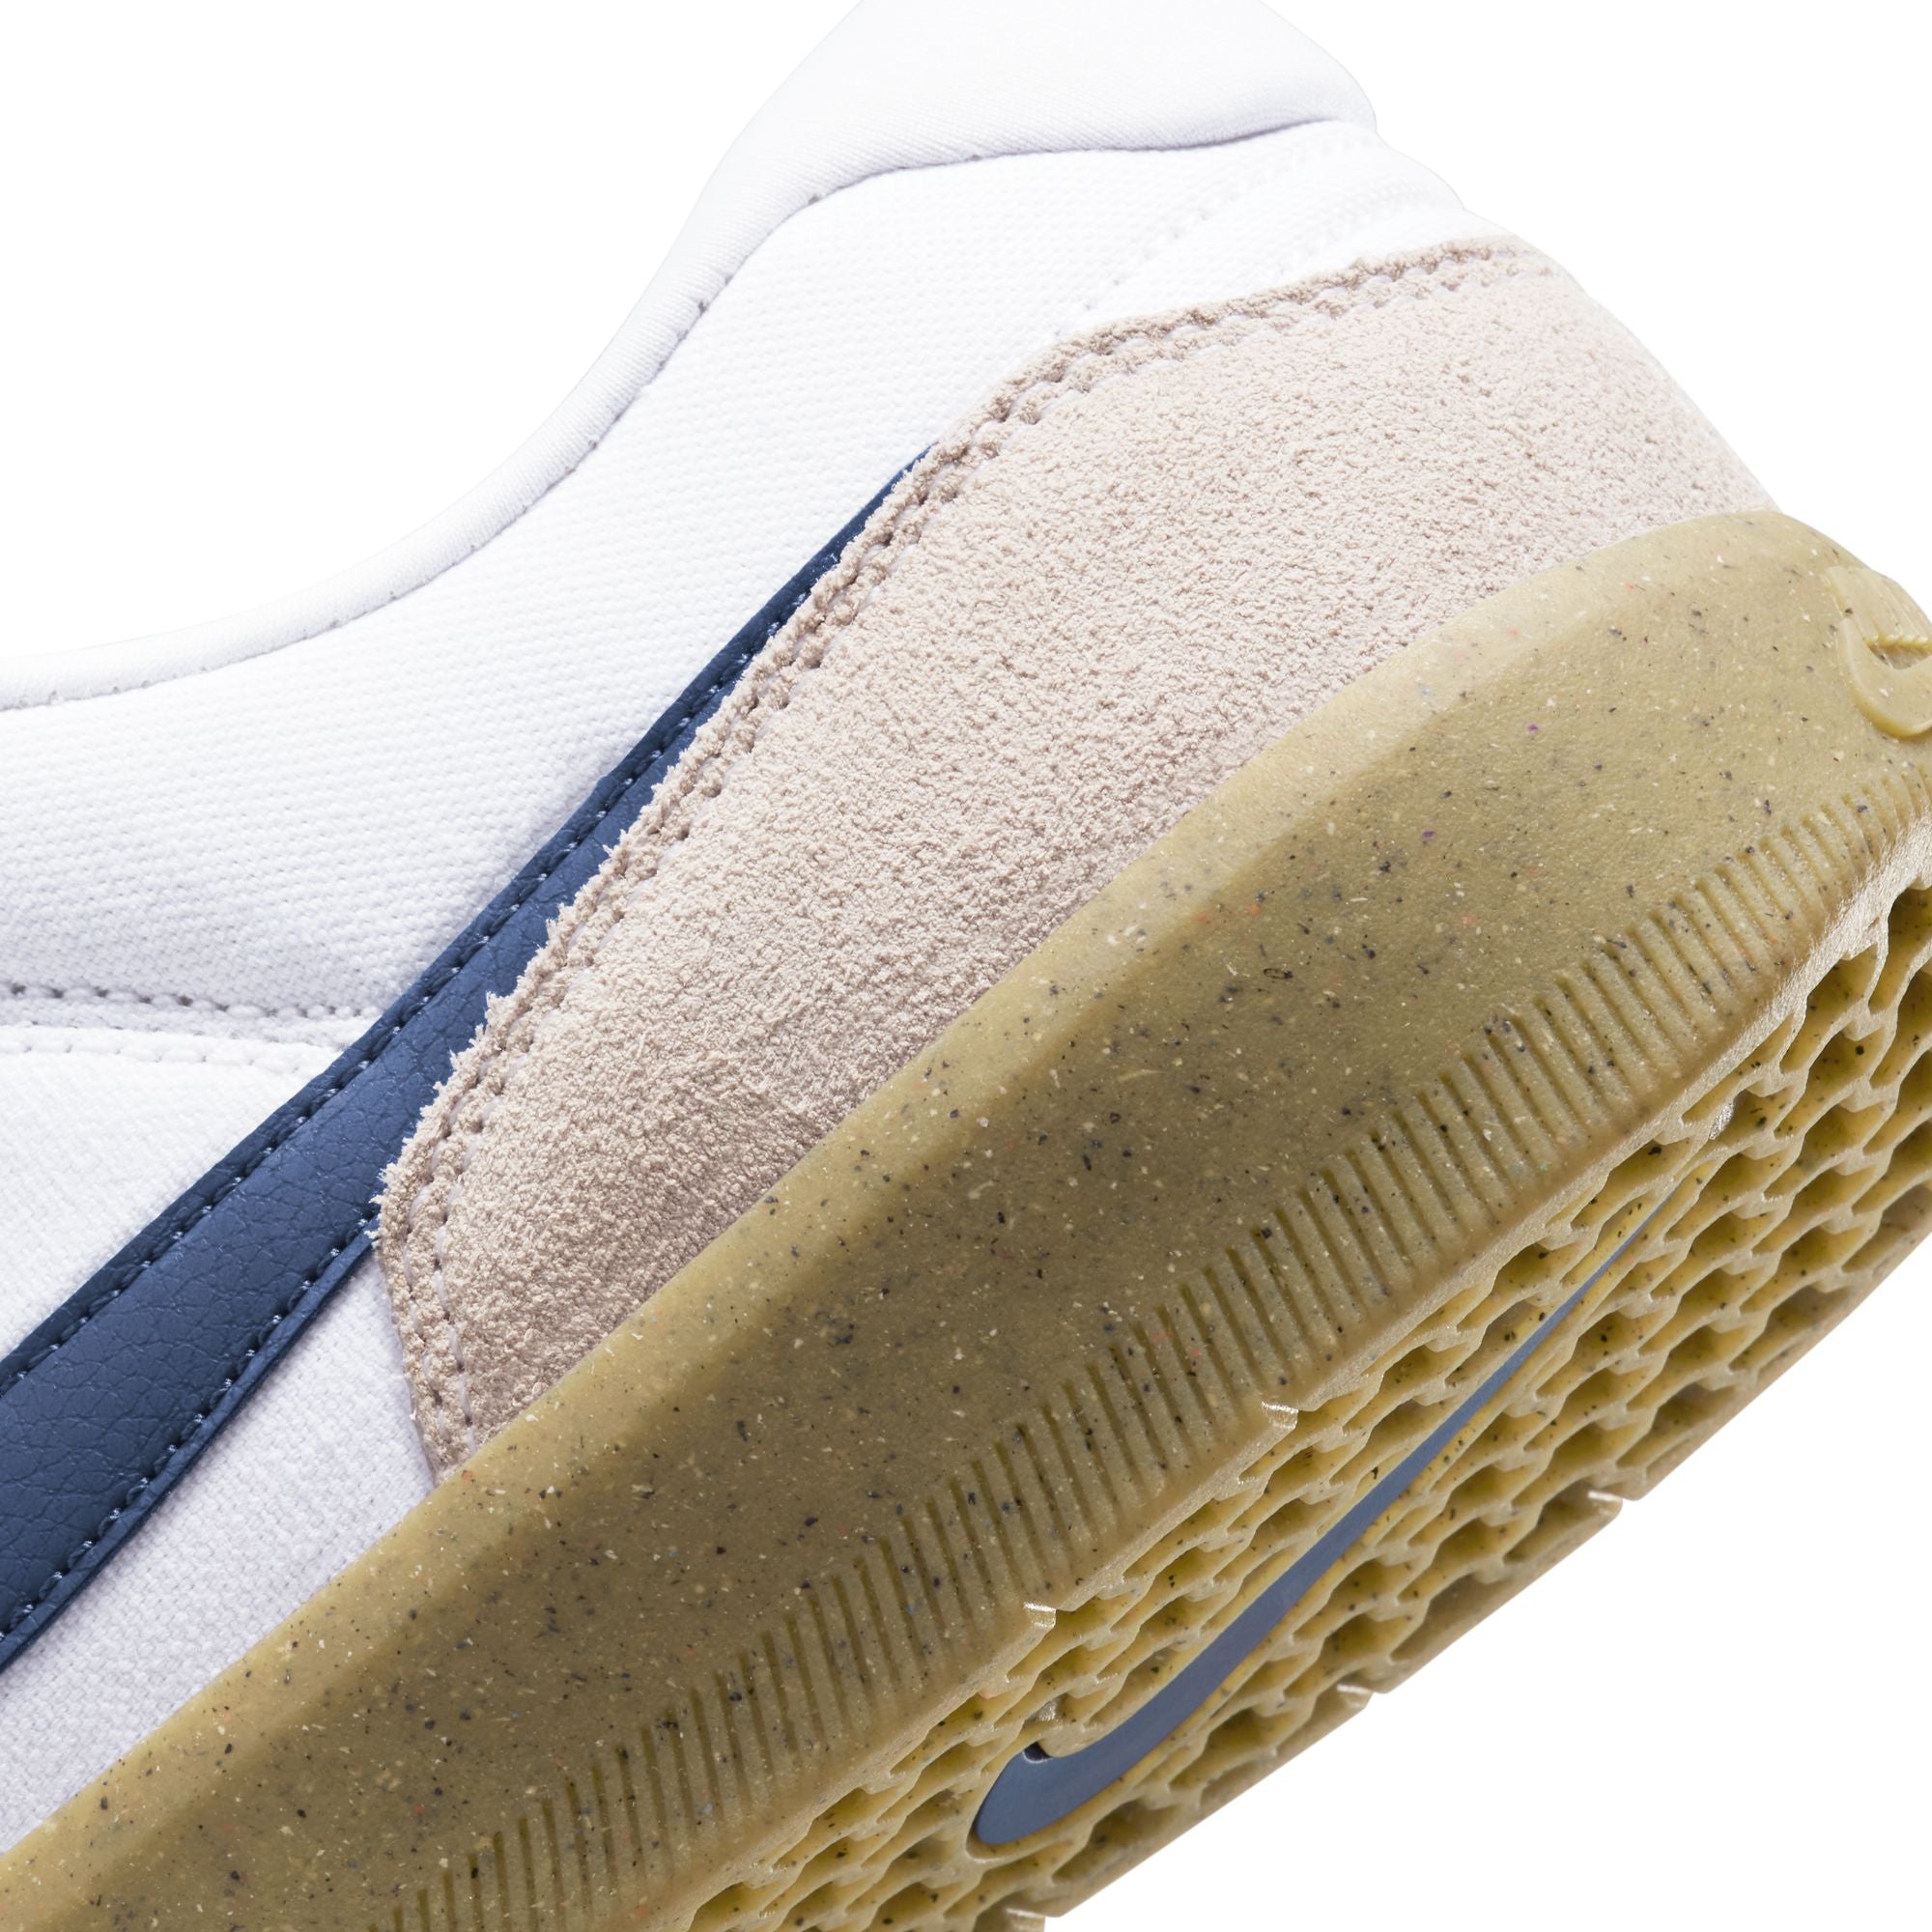 Nike SB Force 58 Shoes - White/Navy-White-Light Gum-Brown